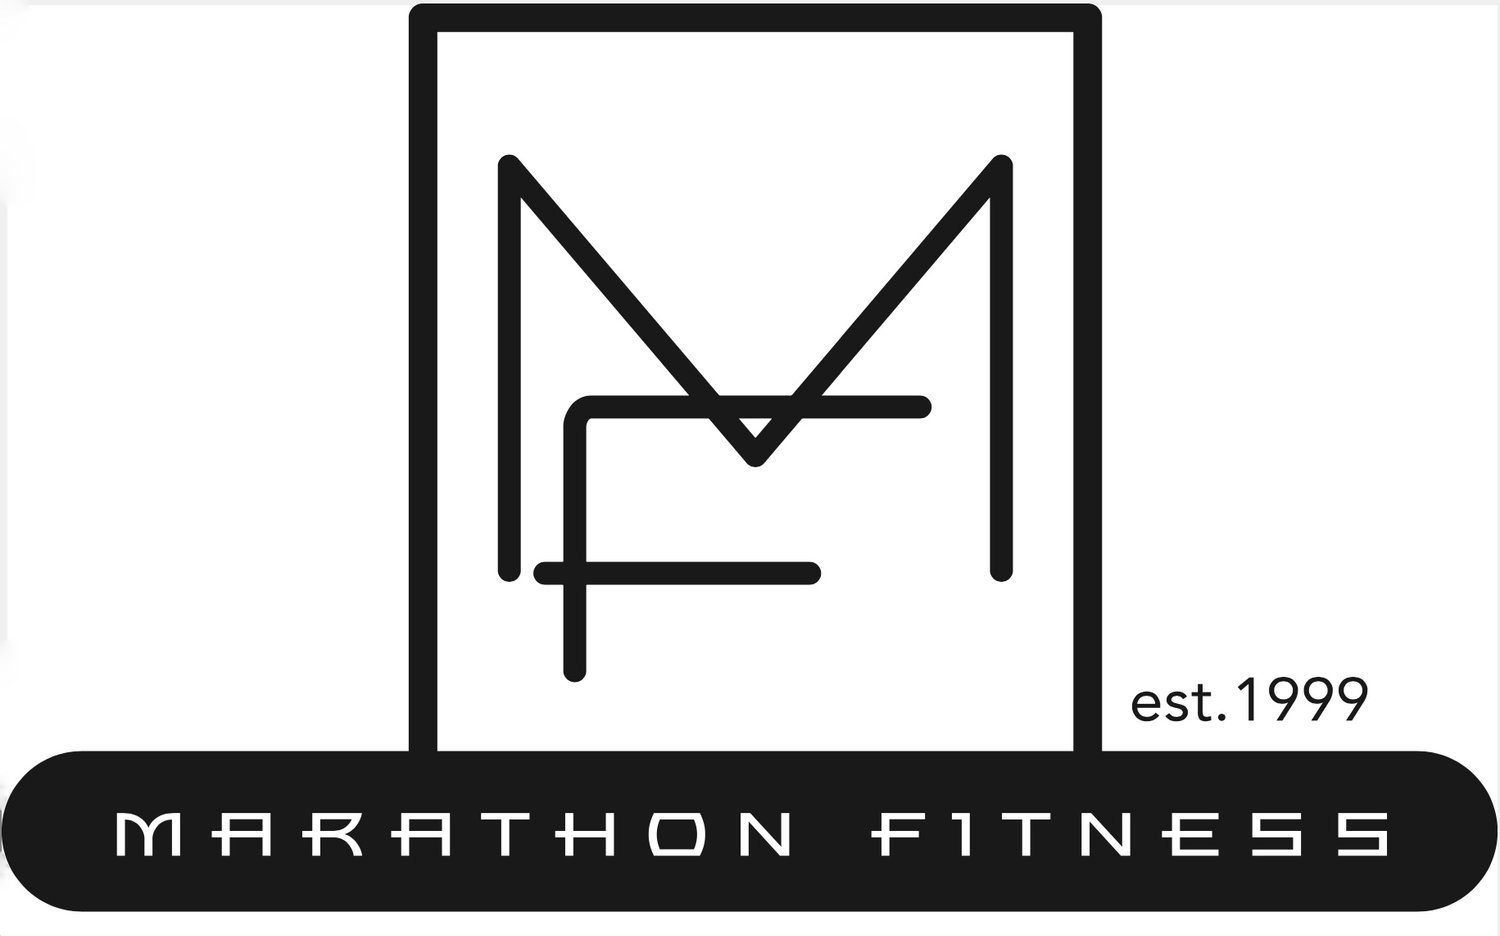 The Marathon Fitness